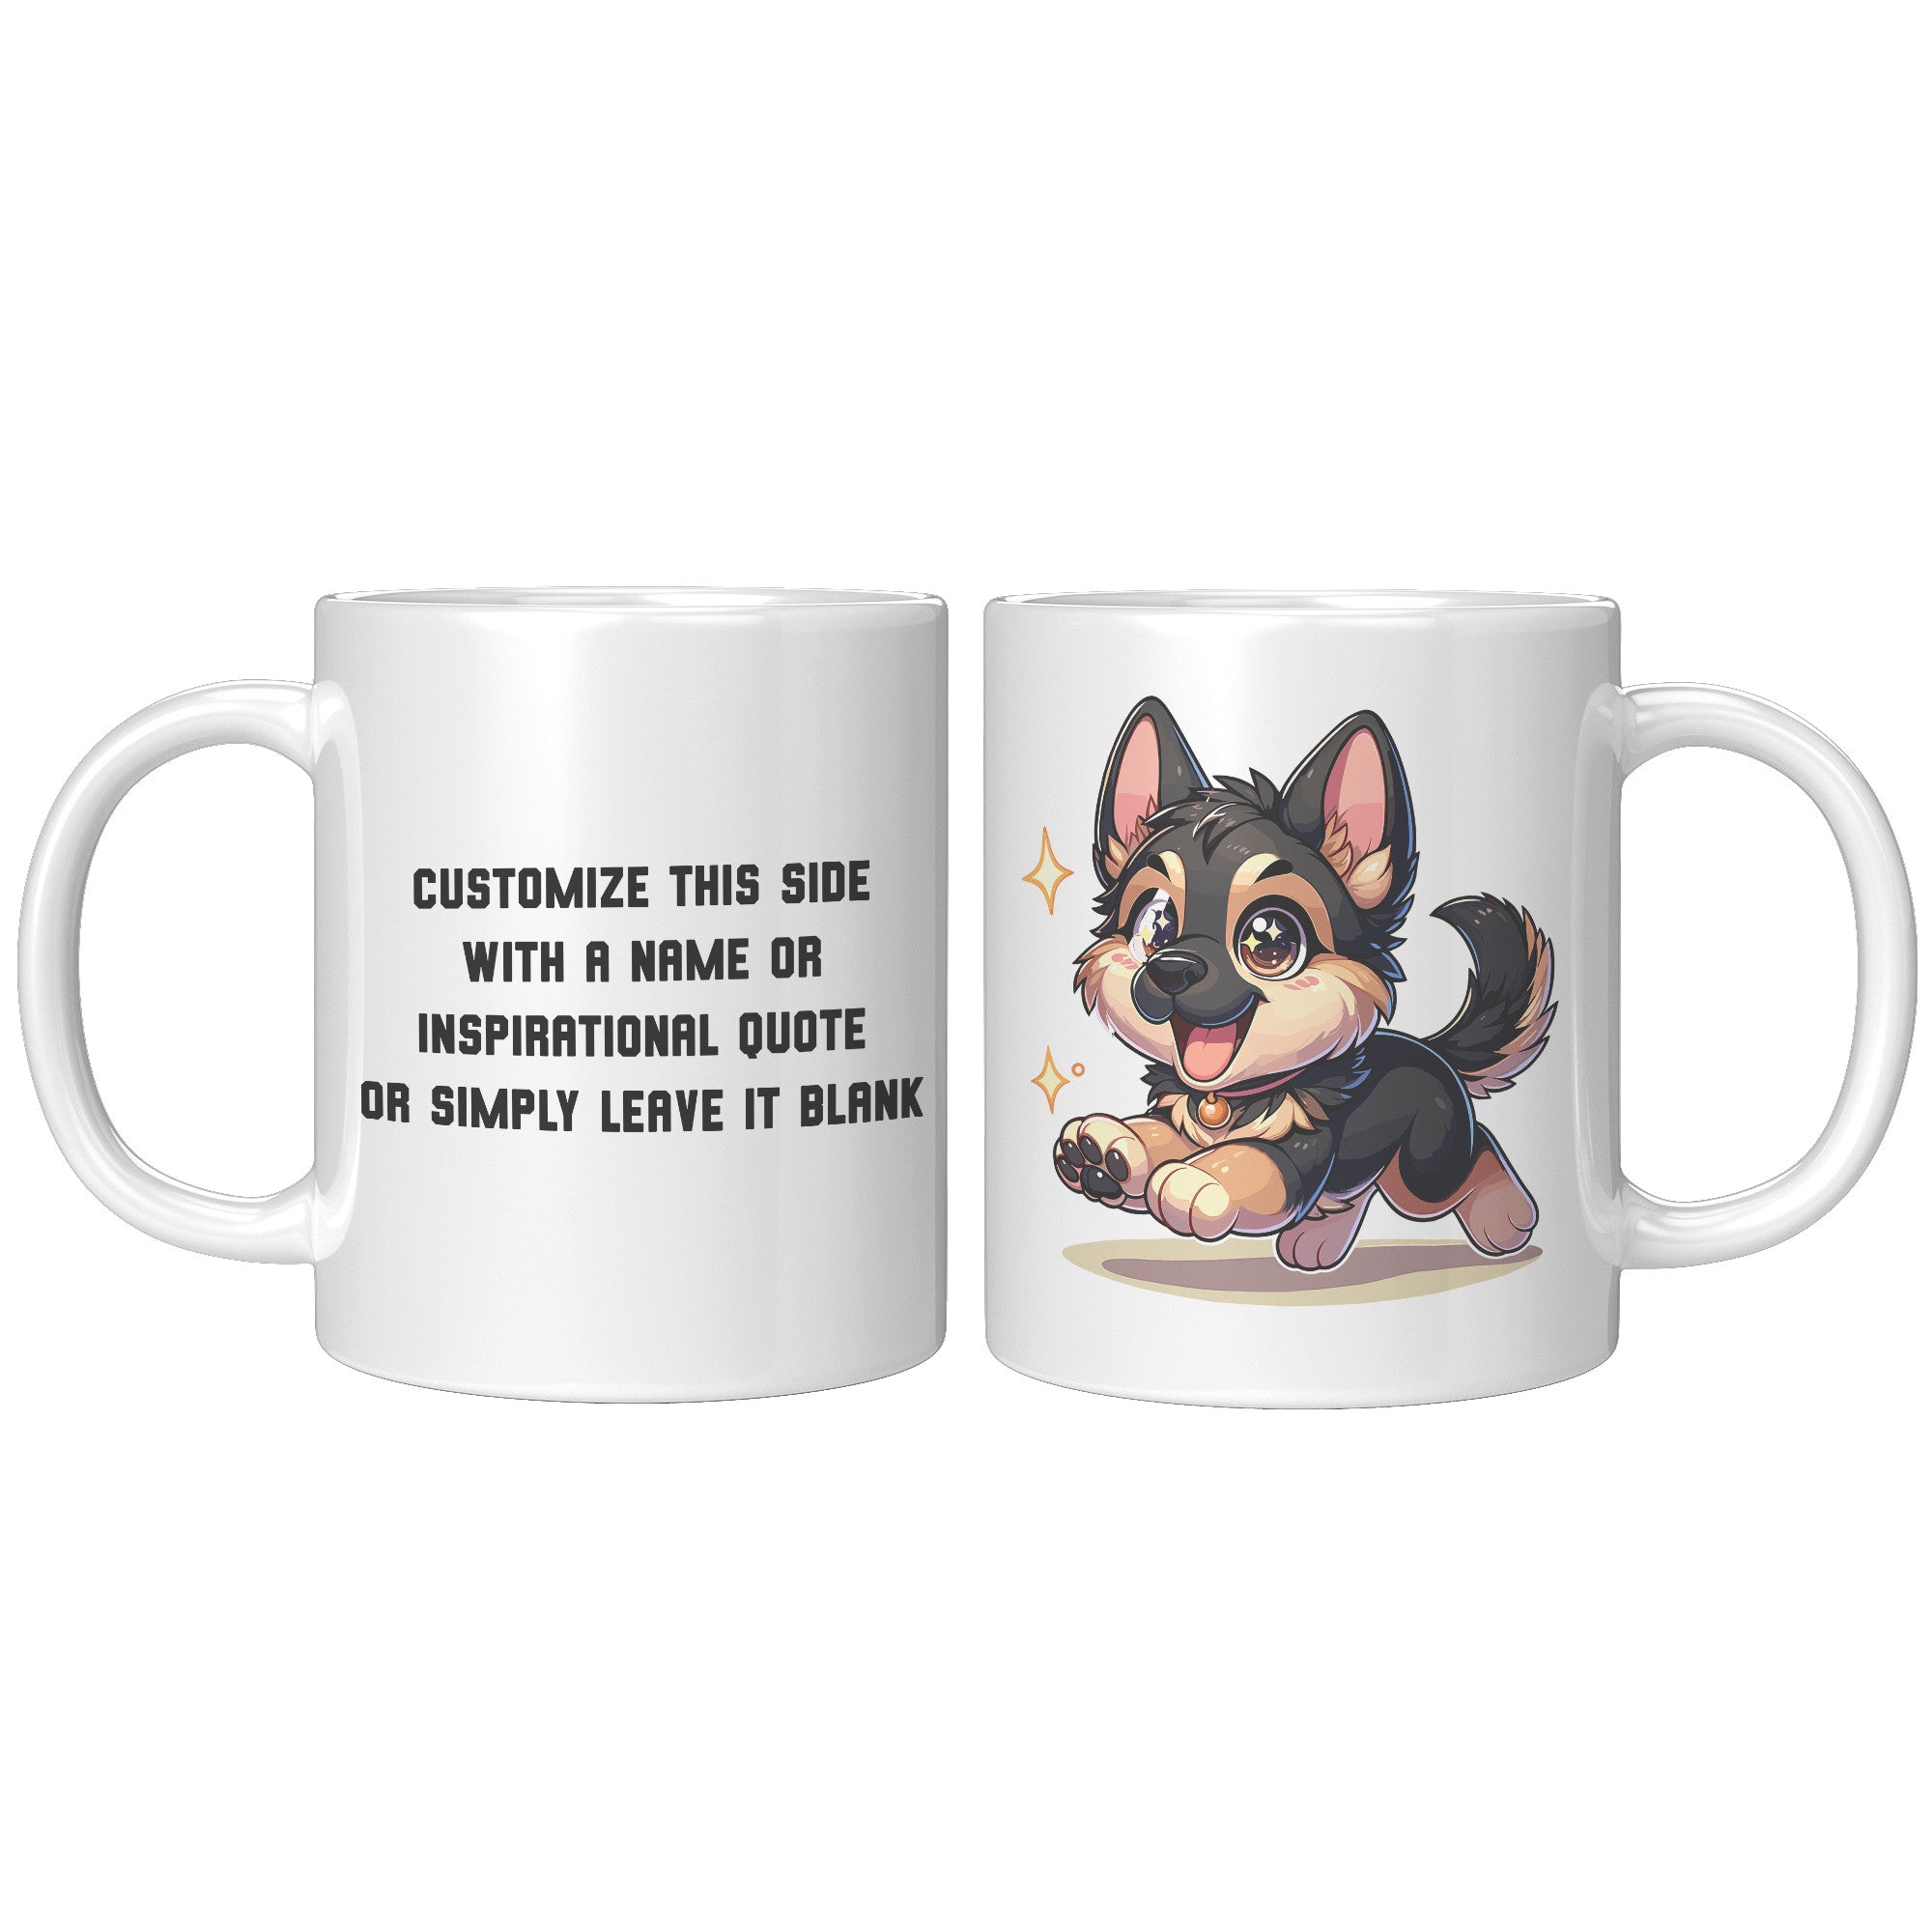 11oz German Shepherd Cartoon Coffee Mug - Loyal GSD Lover Coffee Mug - Perfect Gift for German Shepherd Owners - Protective Dog Breed Coffee Mug - C